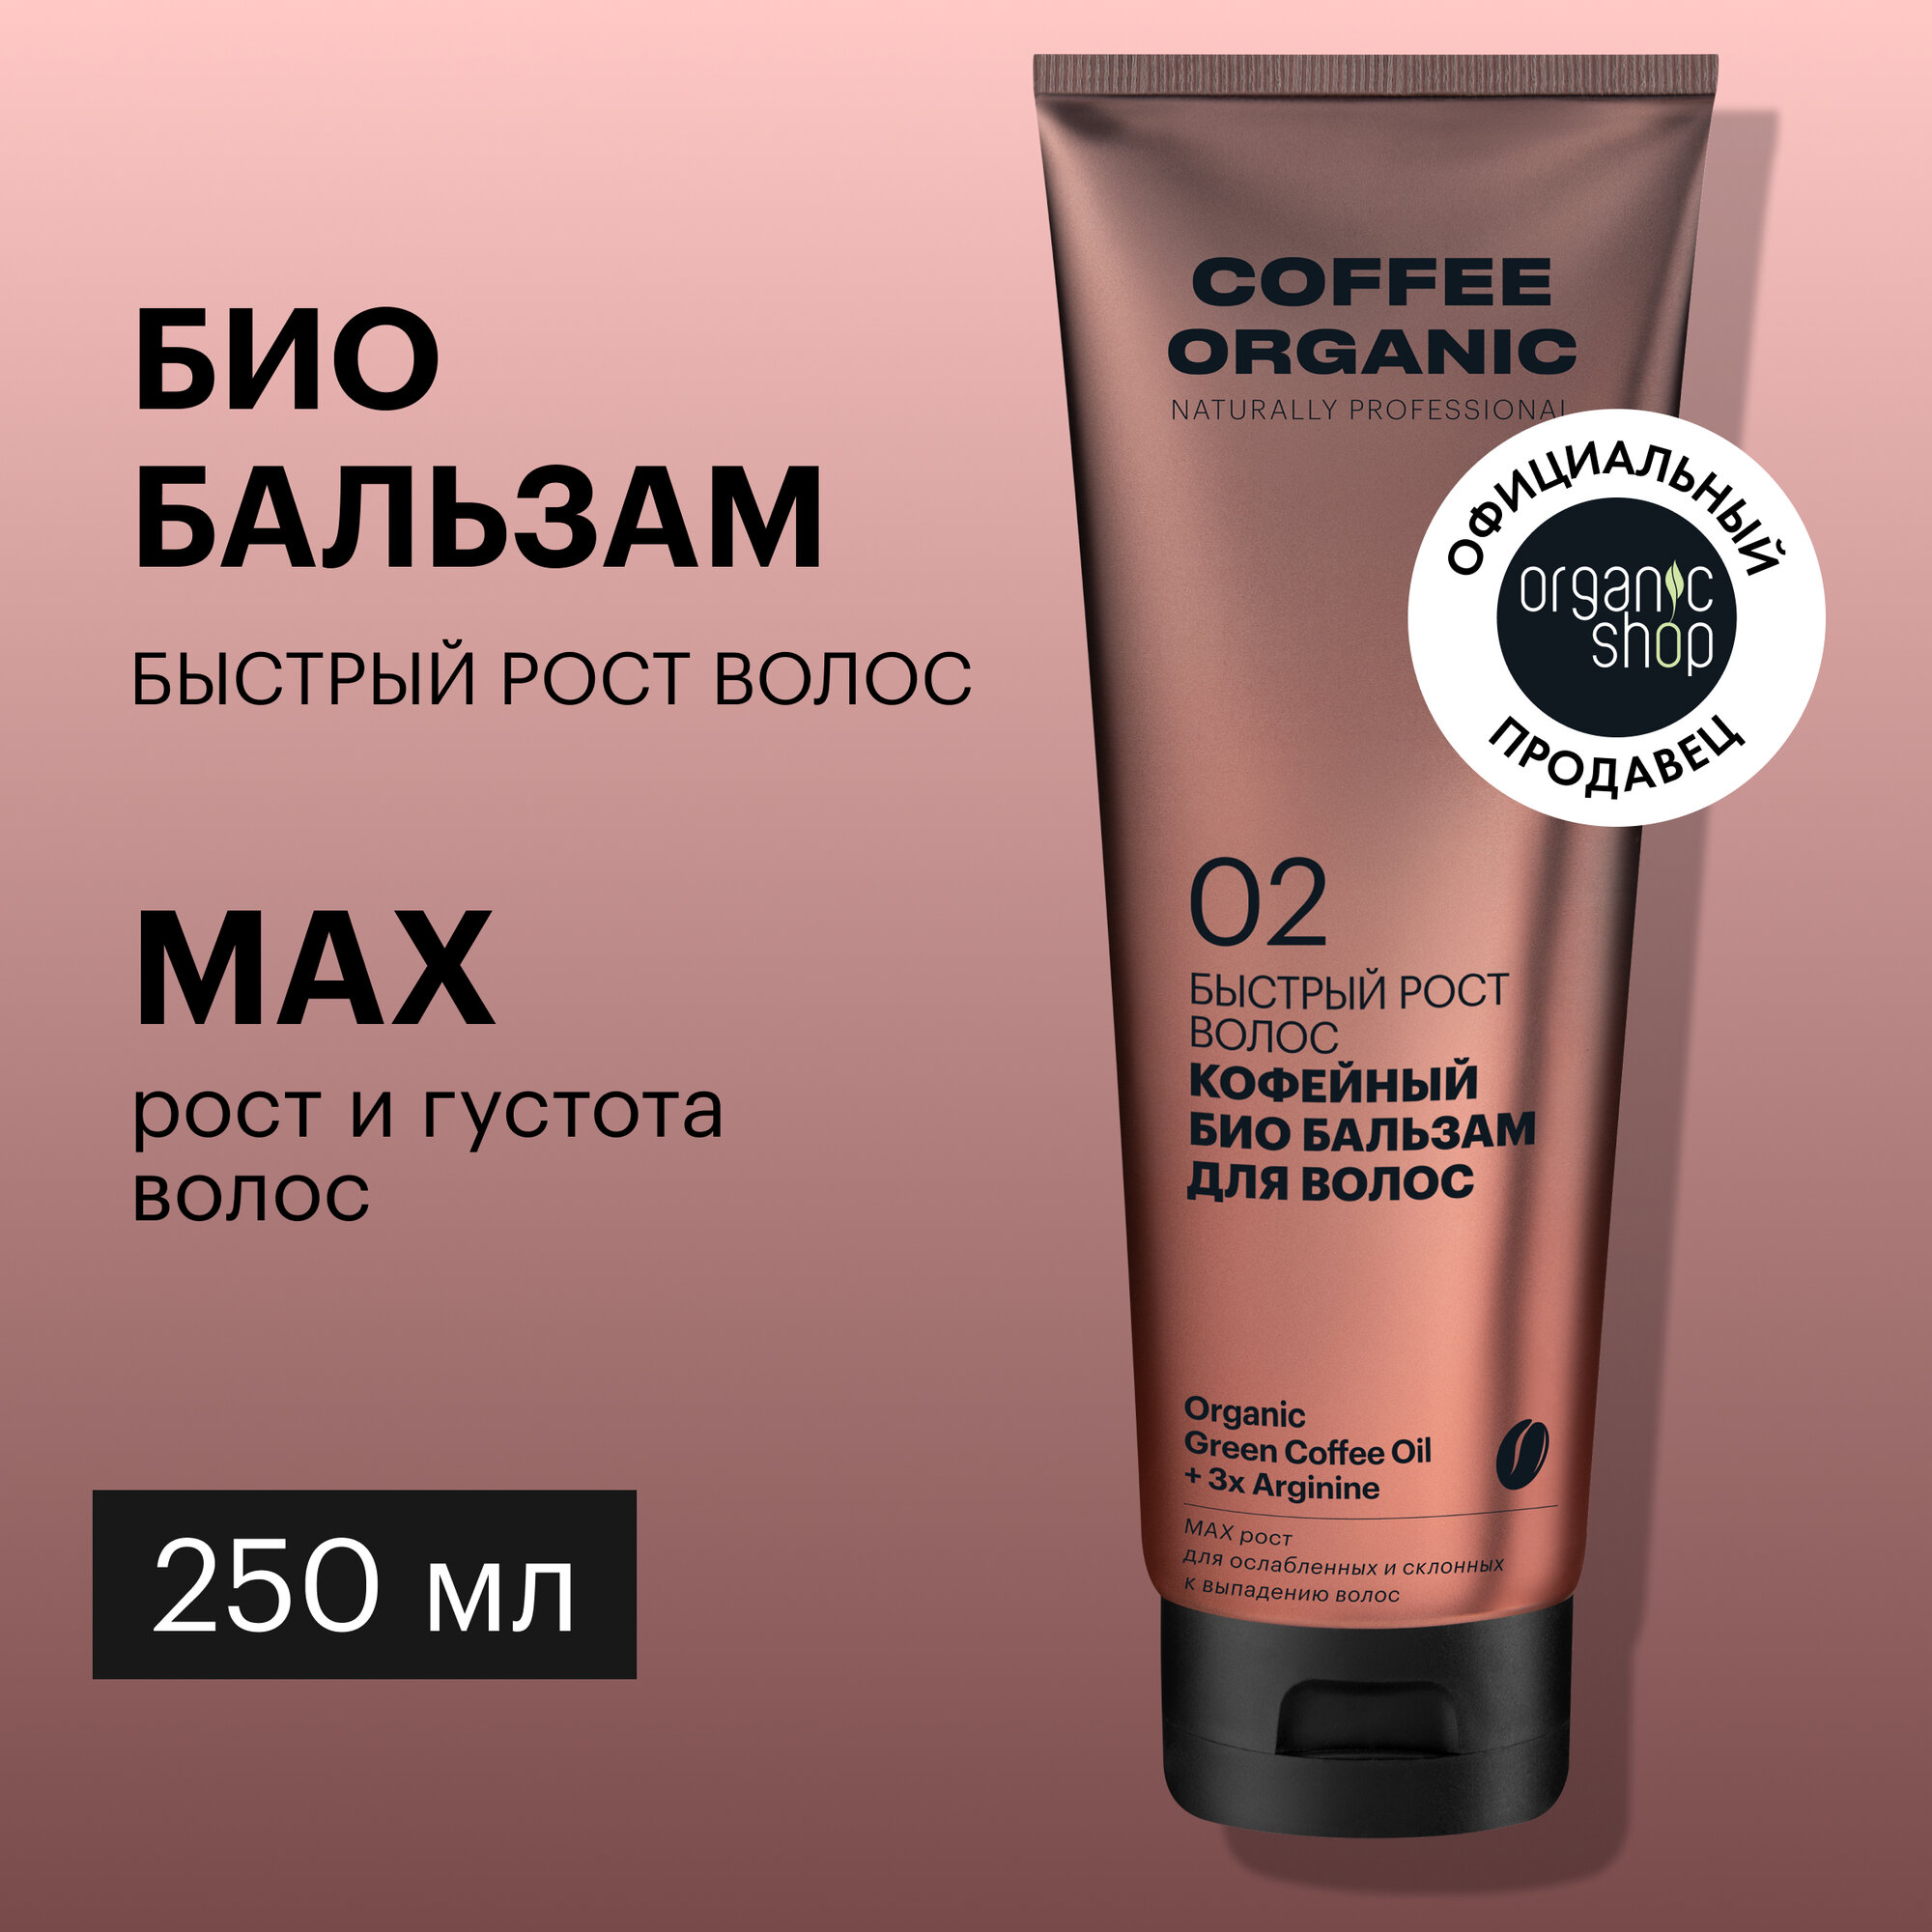 Био бальзам Organic Shop Organic naturally professional Coffee для волос Быстрый рост, 250 мл